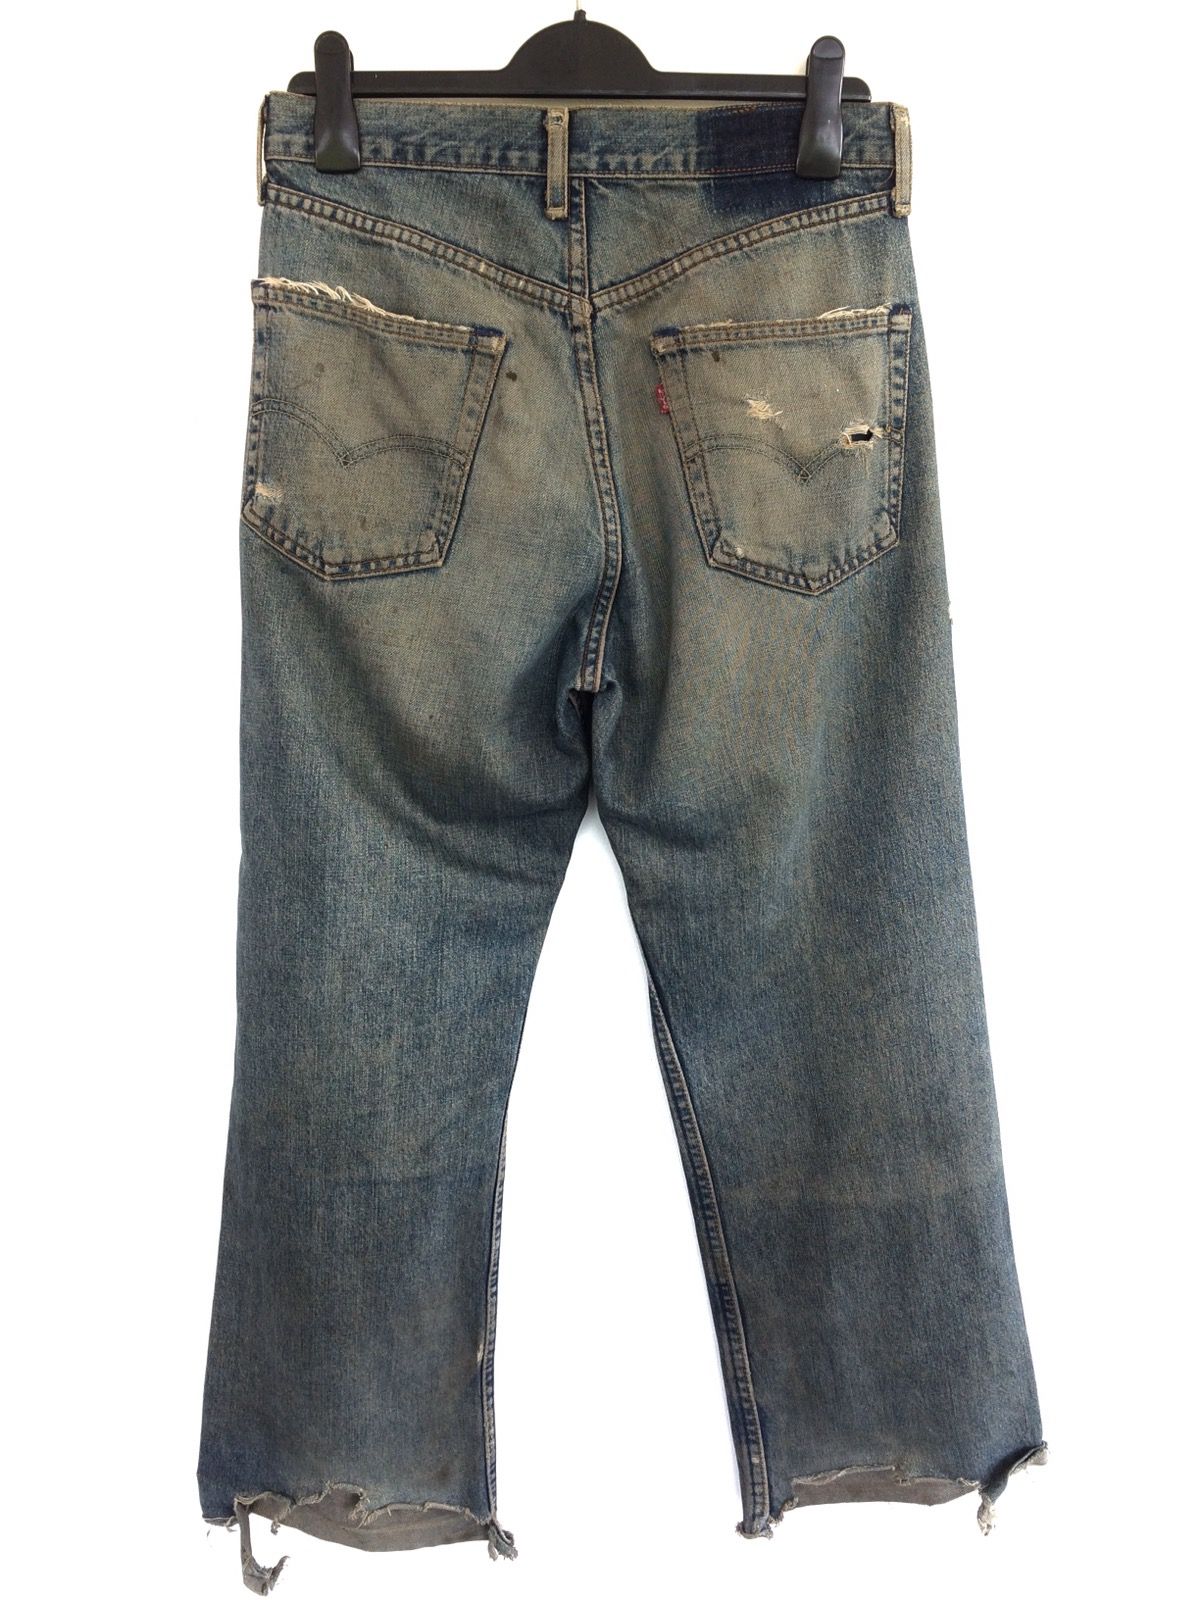 Vintage Levis Distressed Kurt Cobain Fashion Style Denim Pant Size US 31 - 6 Thumbnail